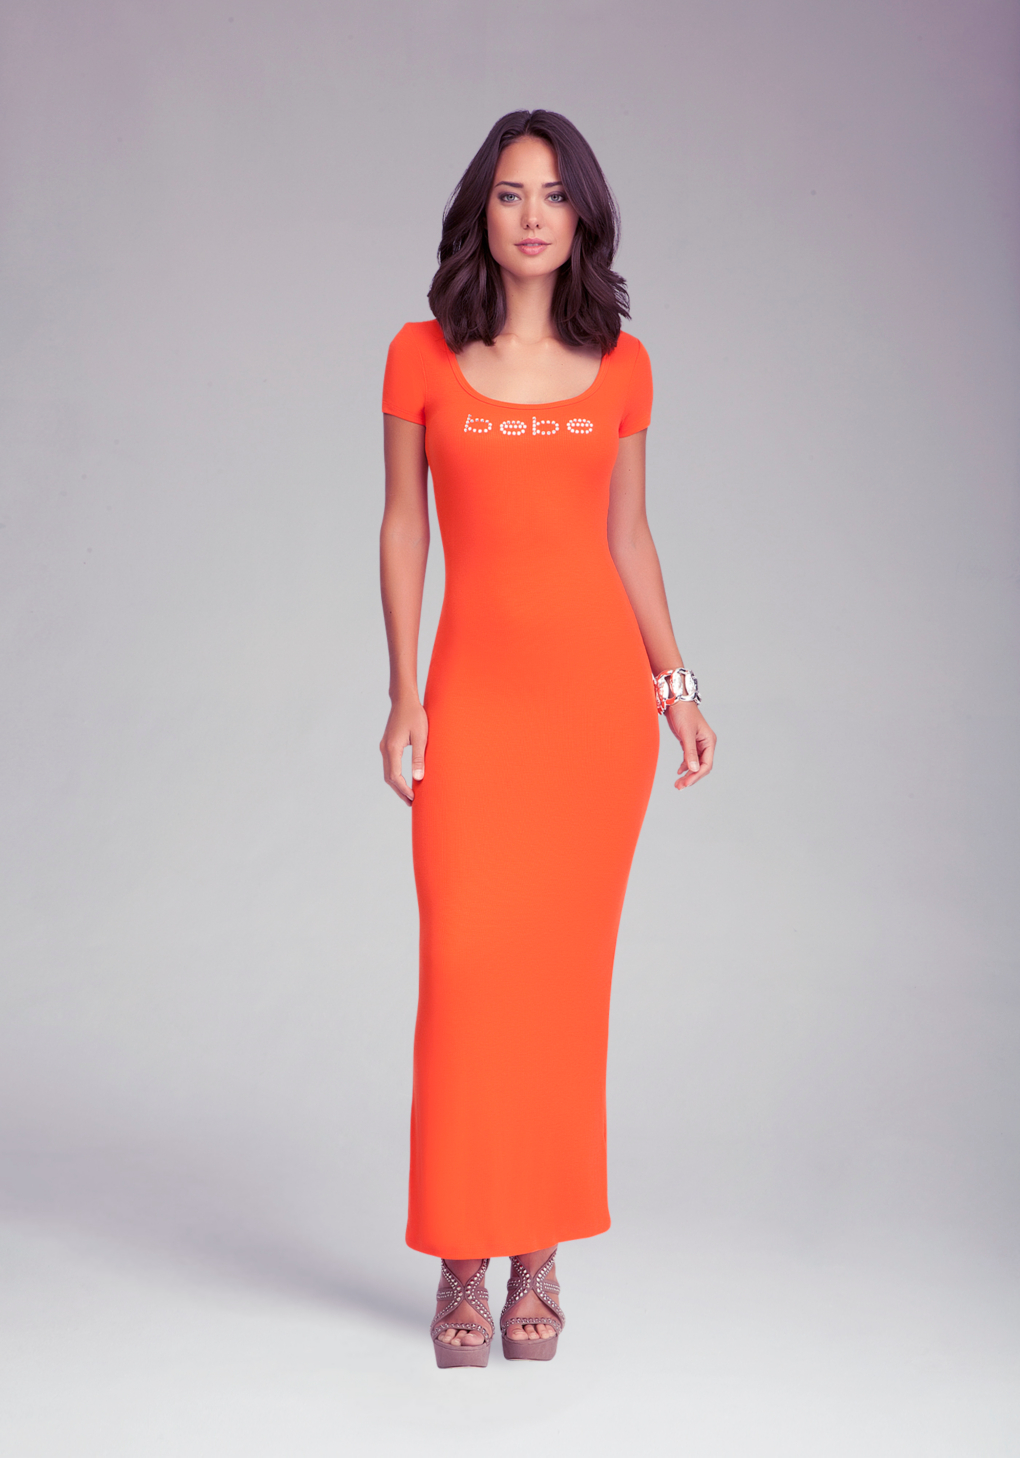 bebe orange dress